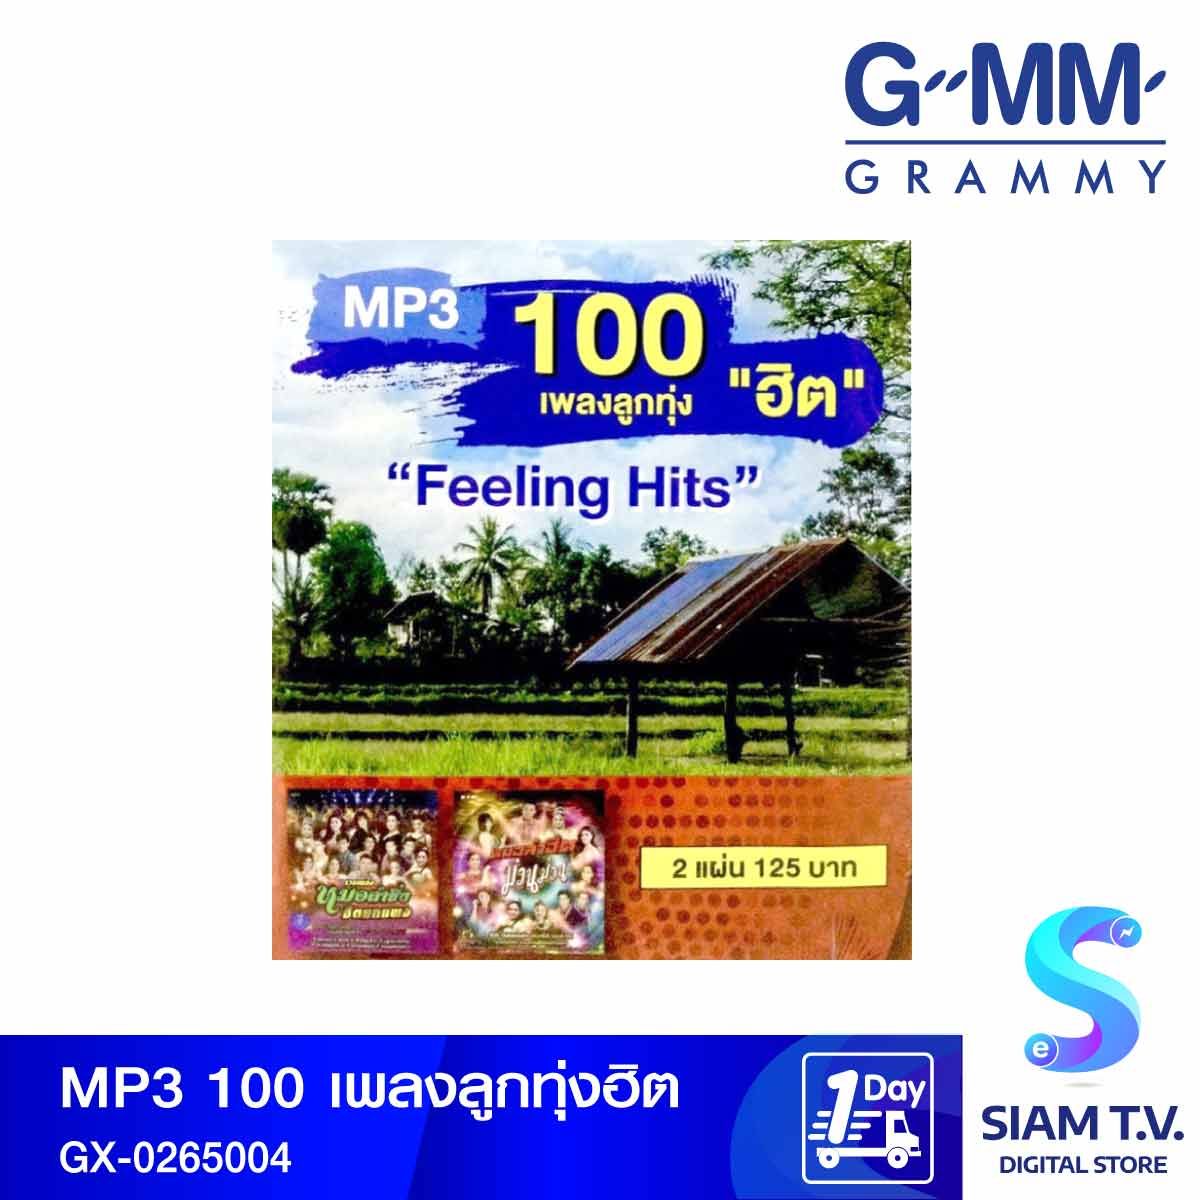 GMM GRAMMY MP3 เพลงลูกทุ่งฮิต FEELING HITS GX-0265004